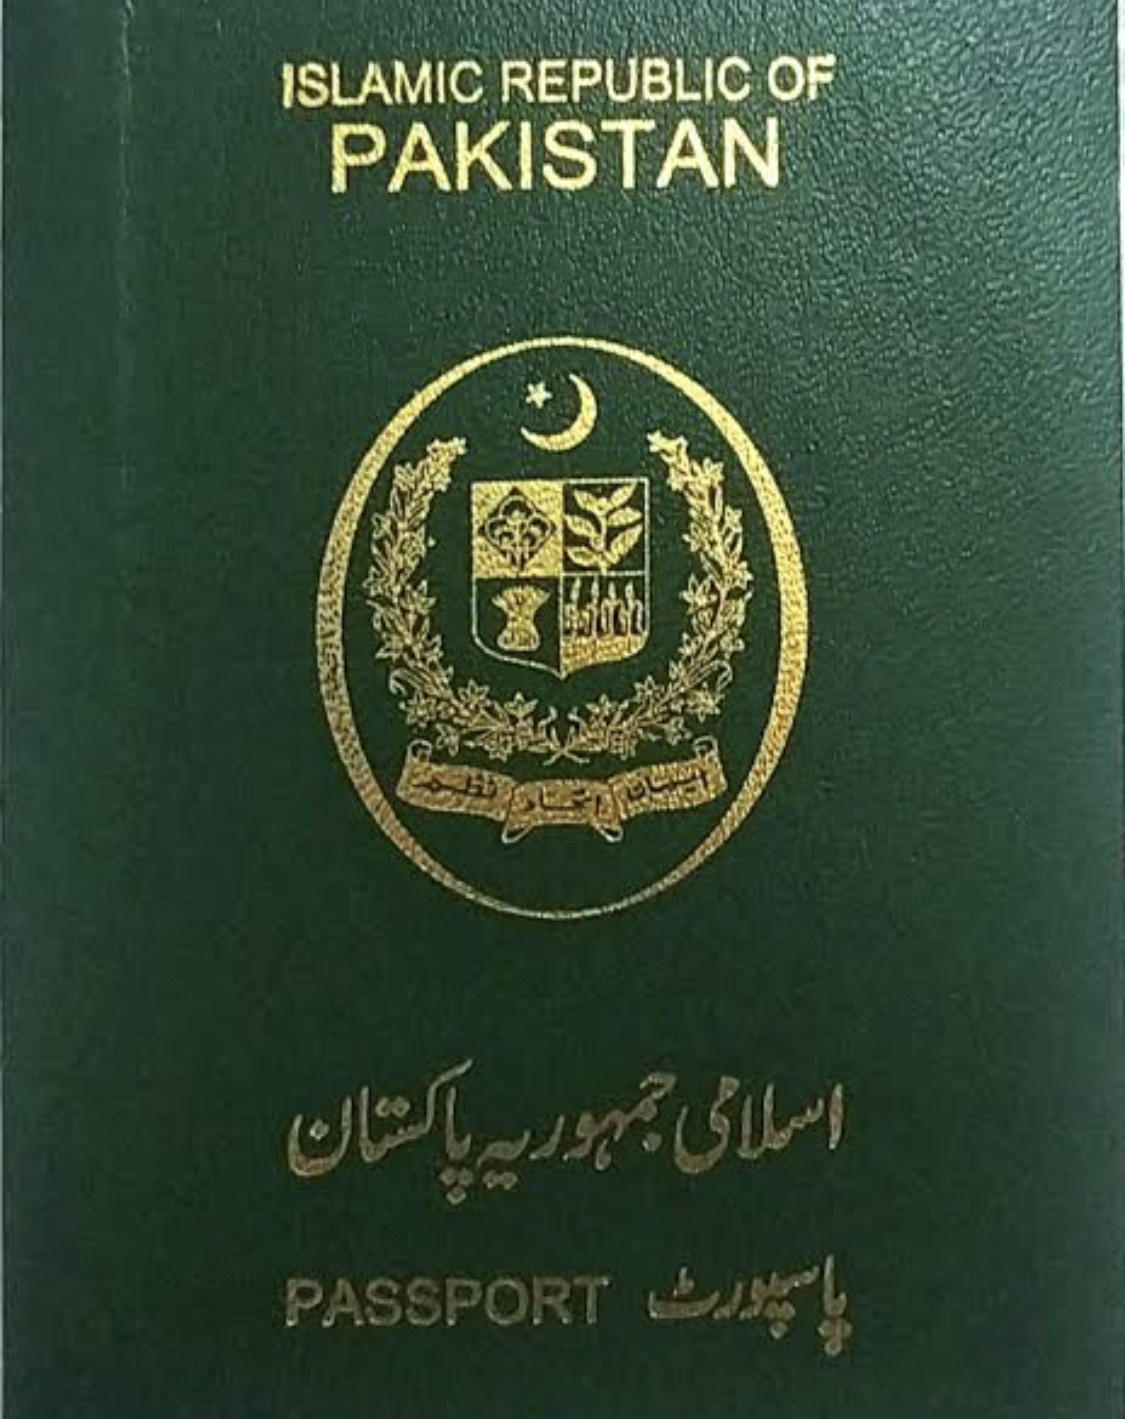 dubai visit visa requirements for pakistani passport